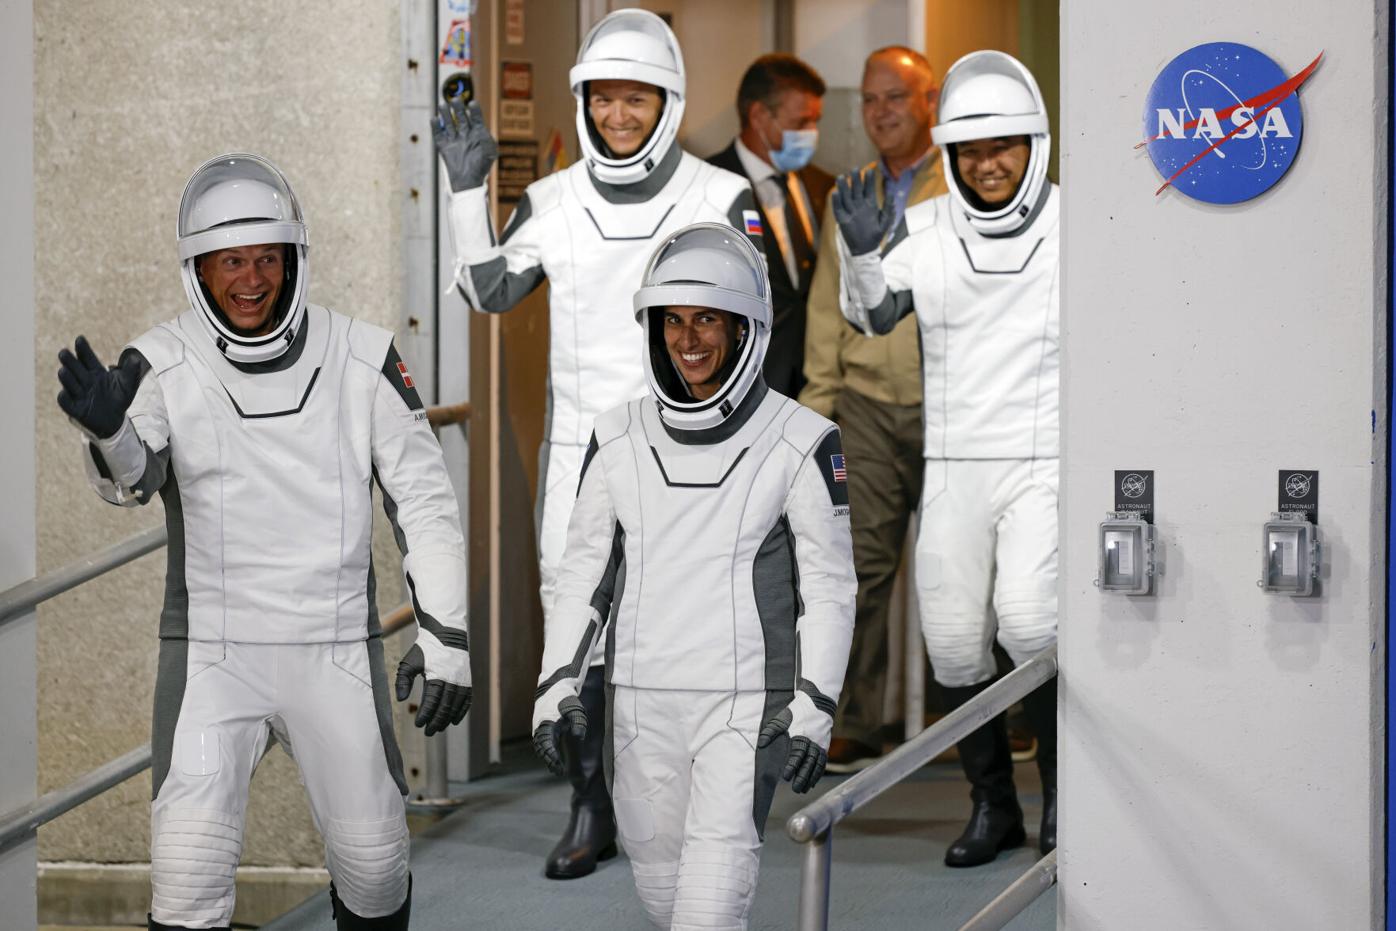 armageddon space suit costume